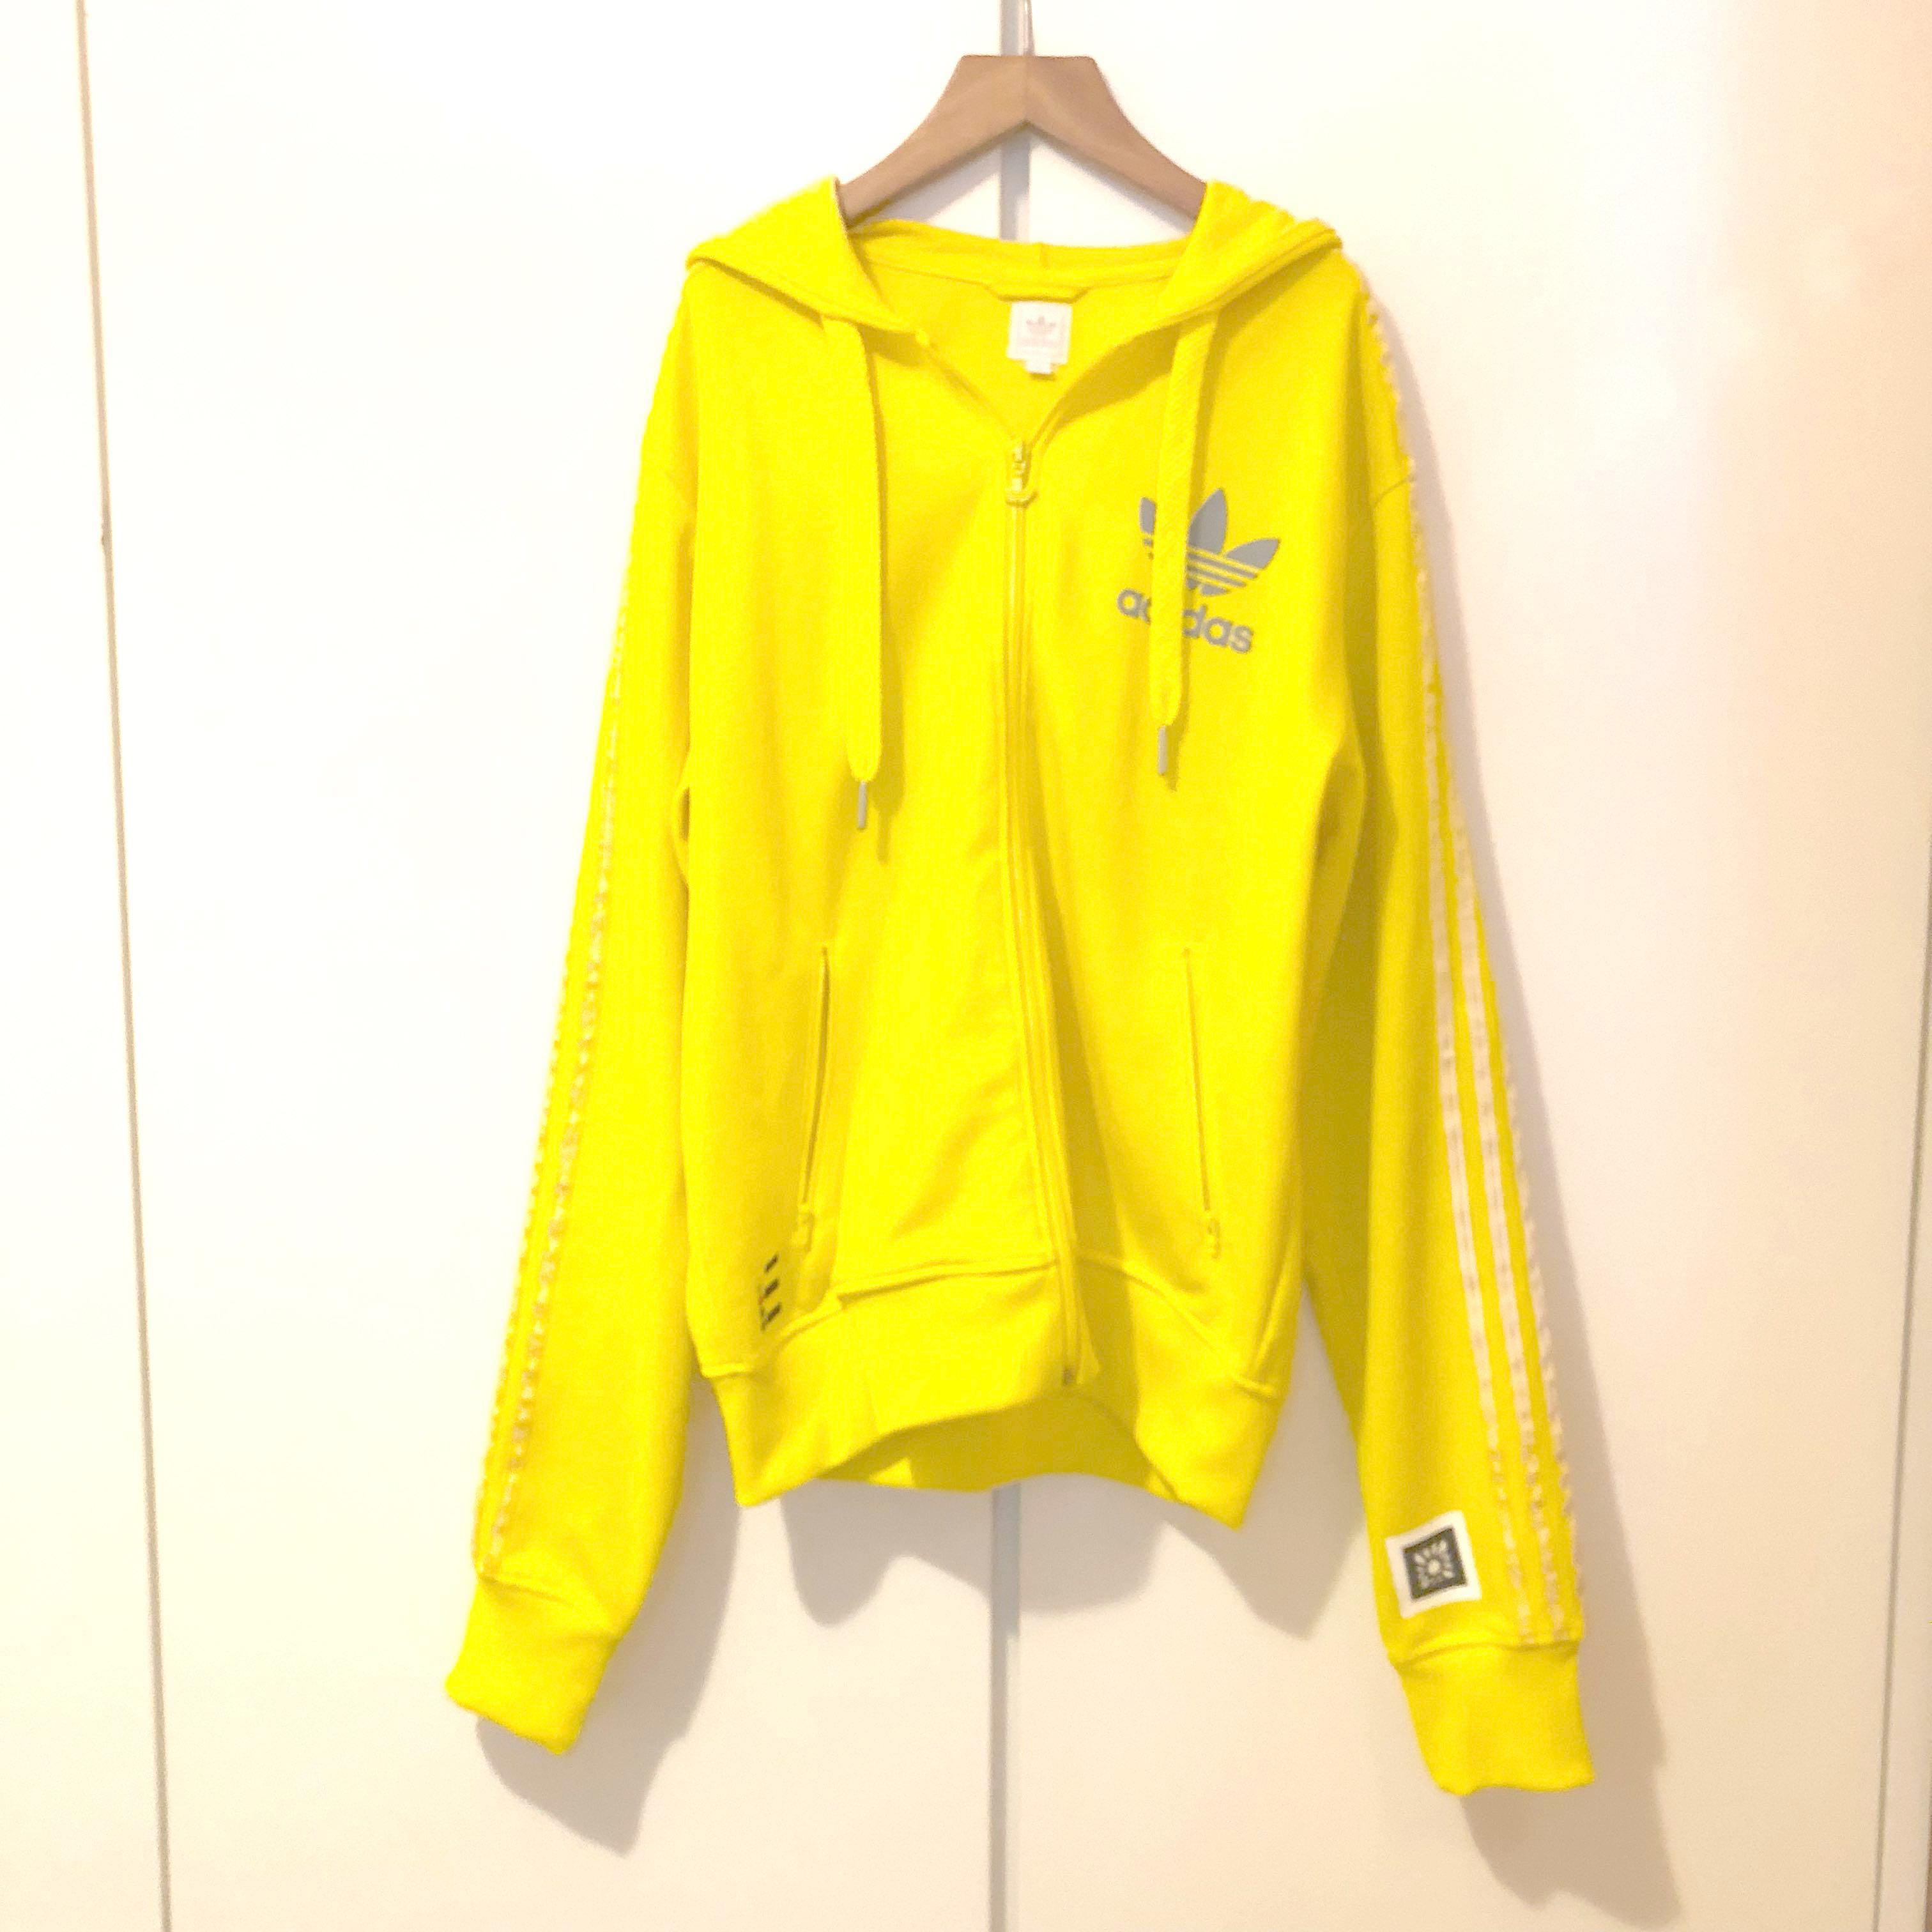 adidas yellow hoodie